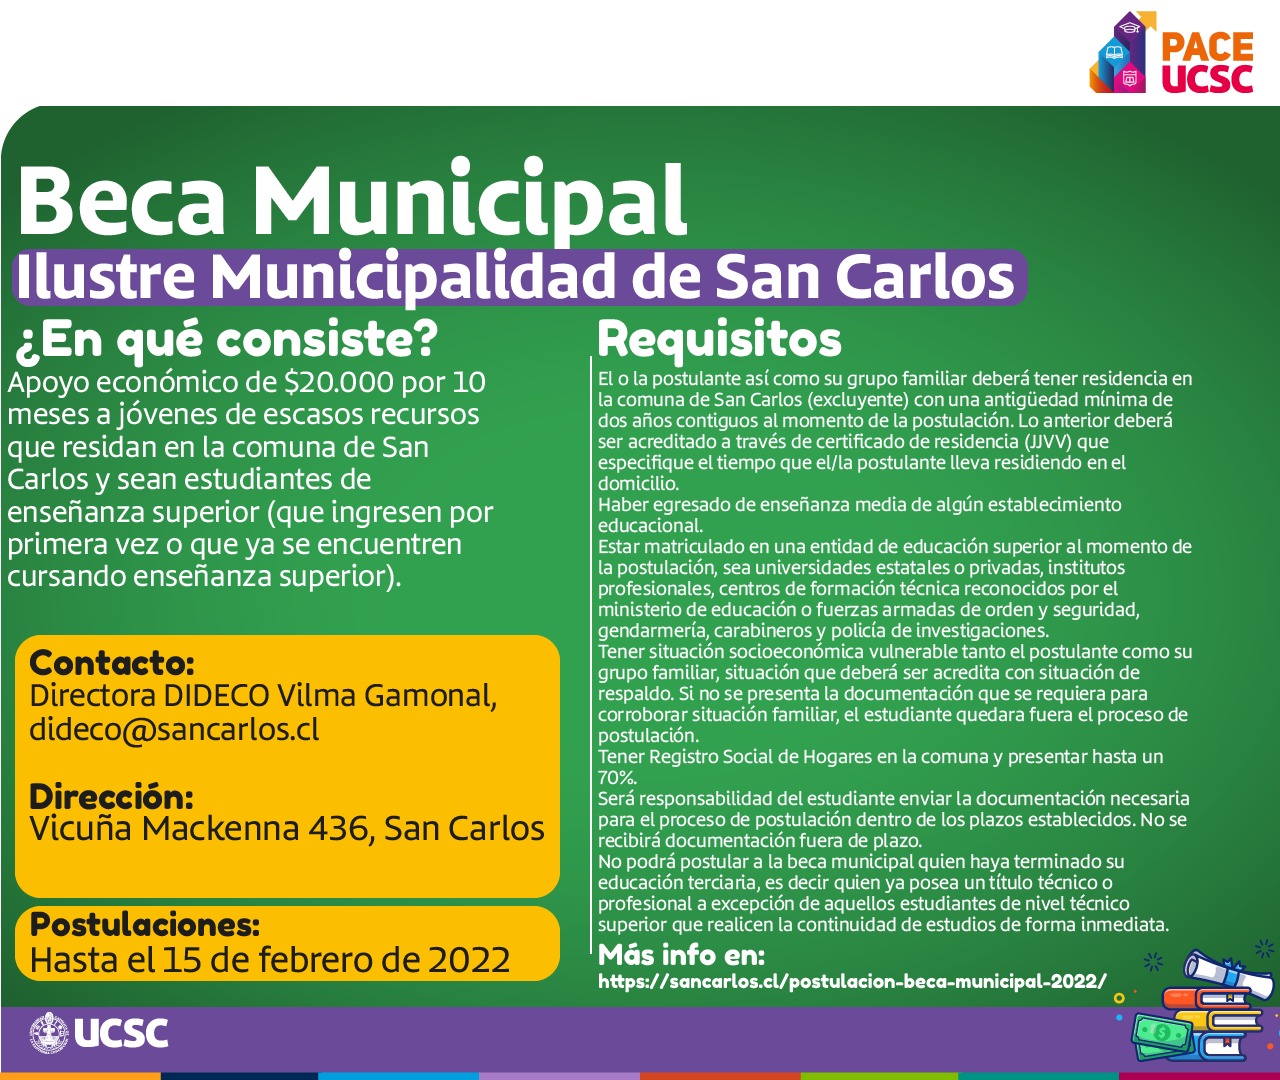 Beca Municipalidad San Carlos 2022 PACE UCSC